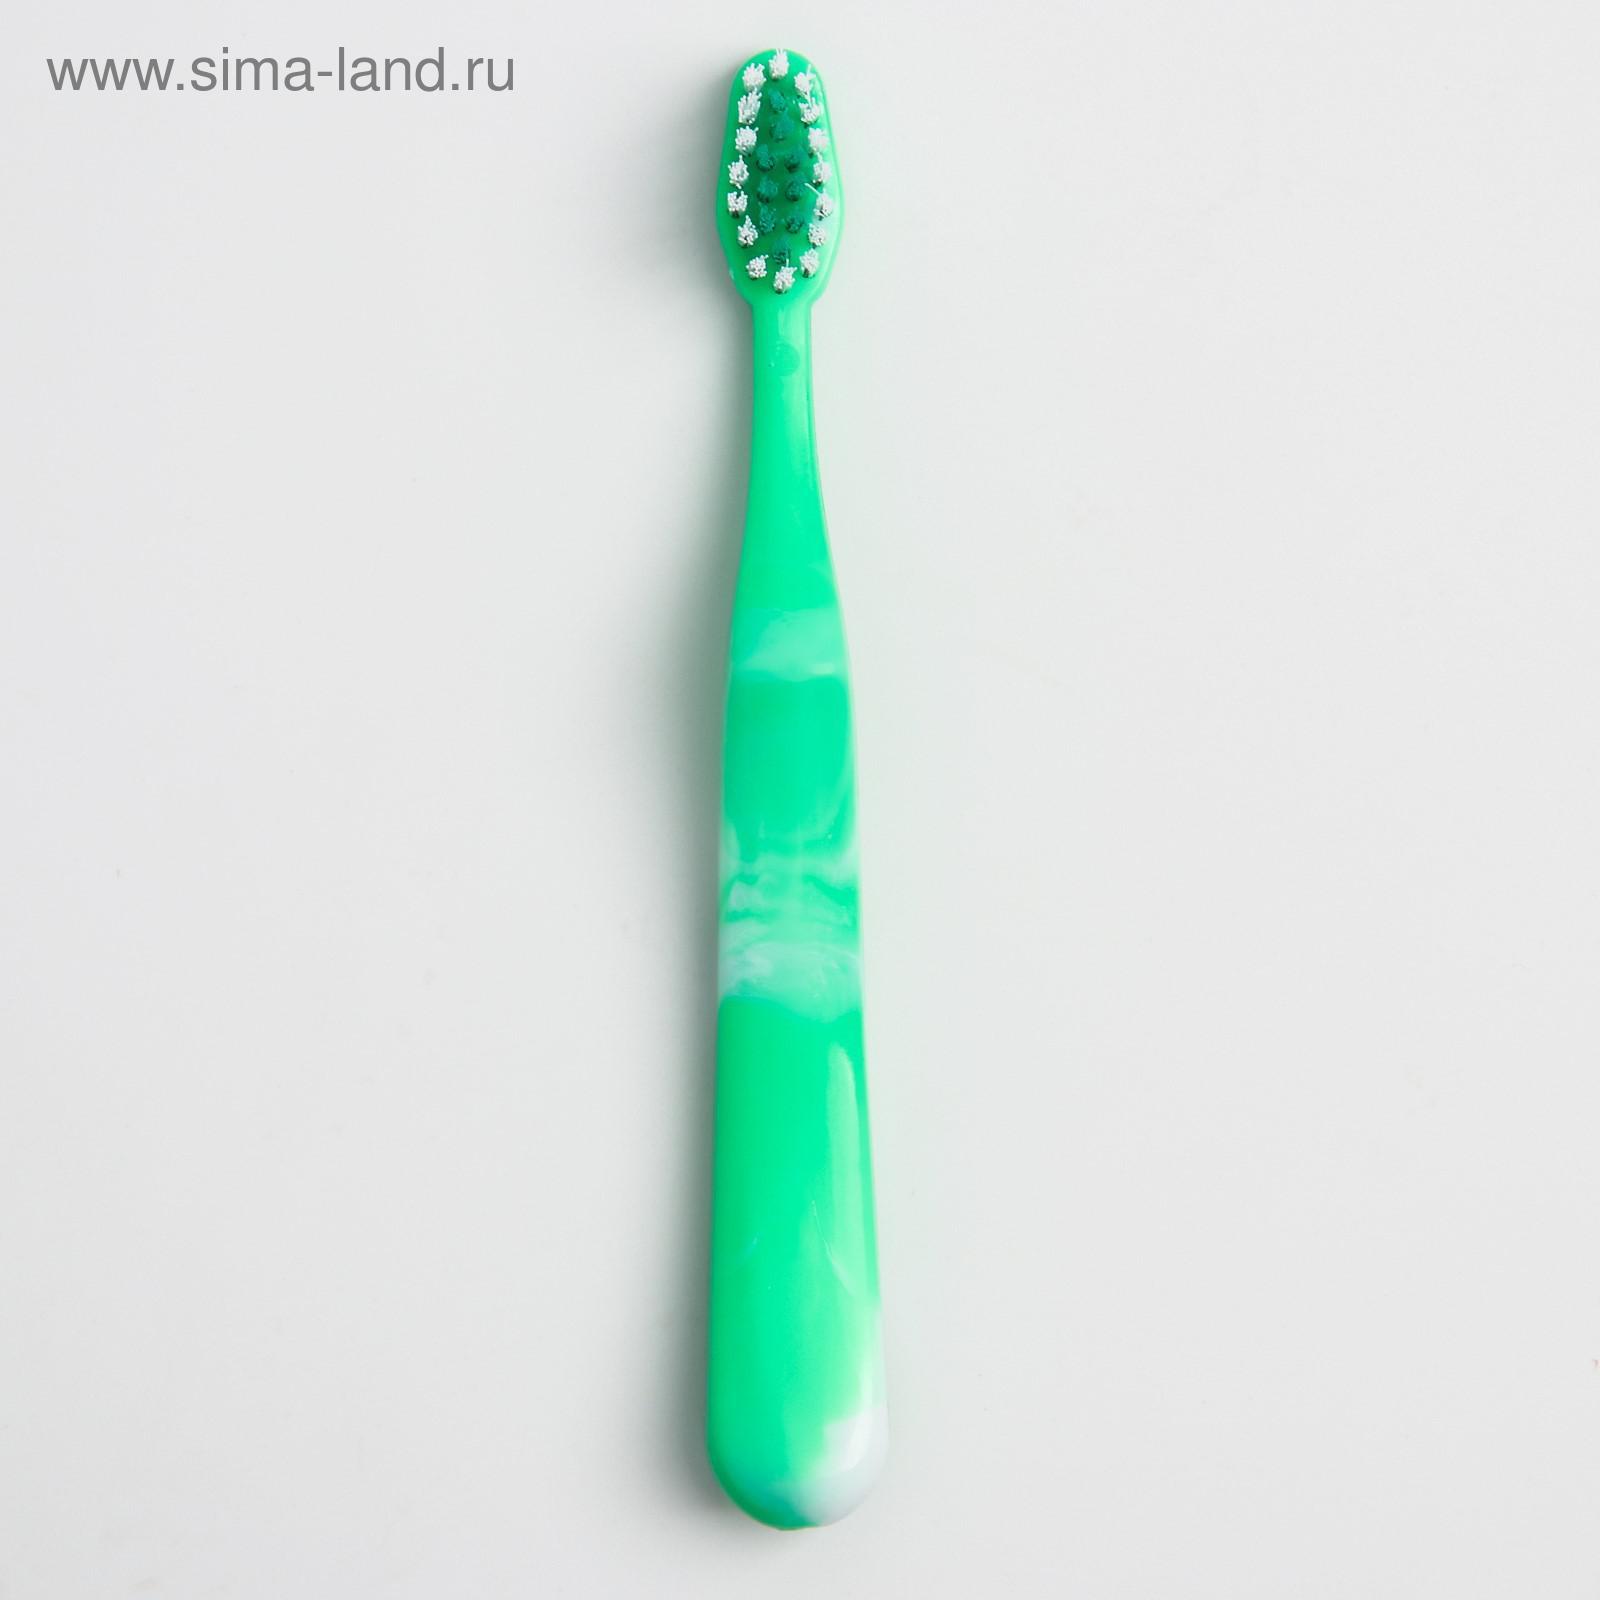 Зубная щётка детская, от 18 мес., цвет зелёный